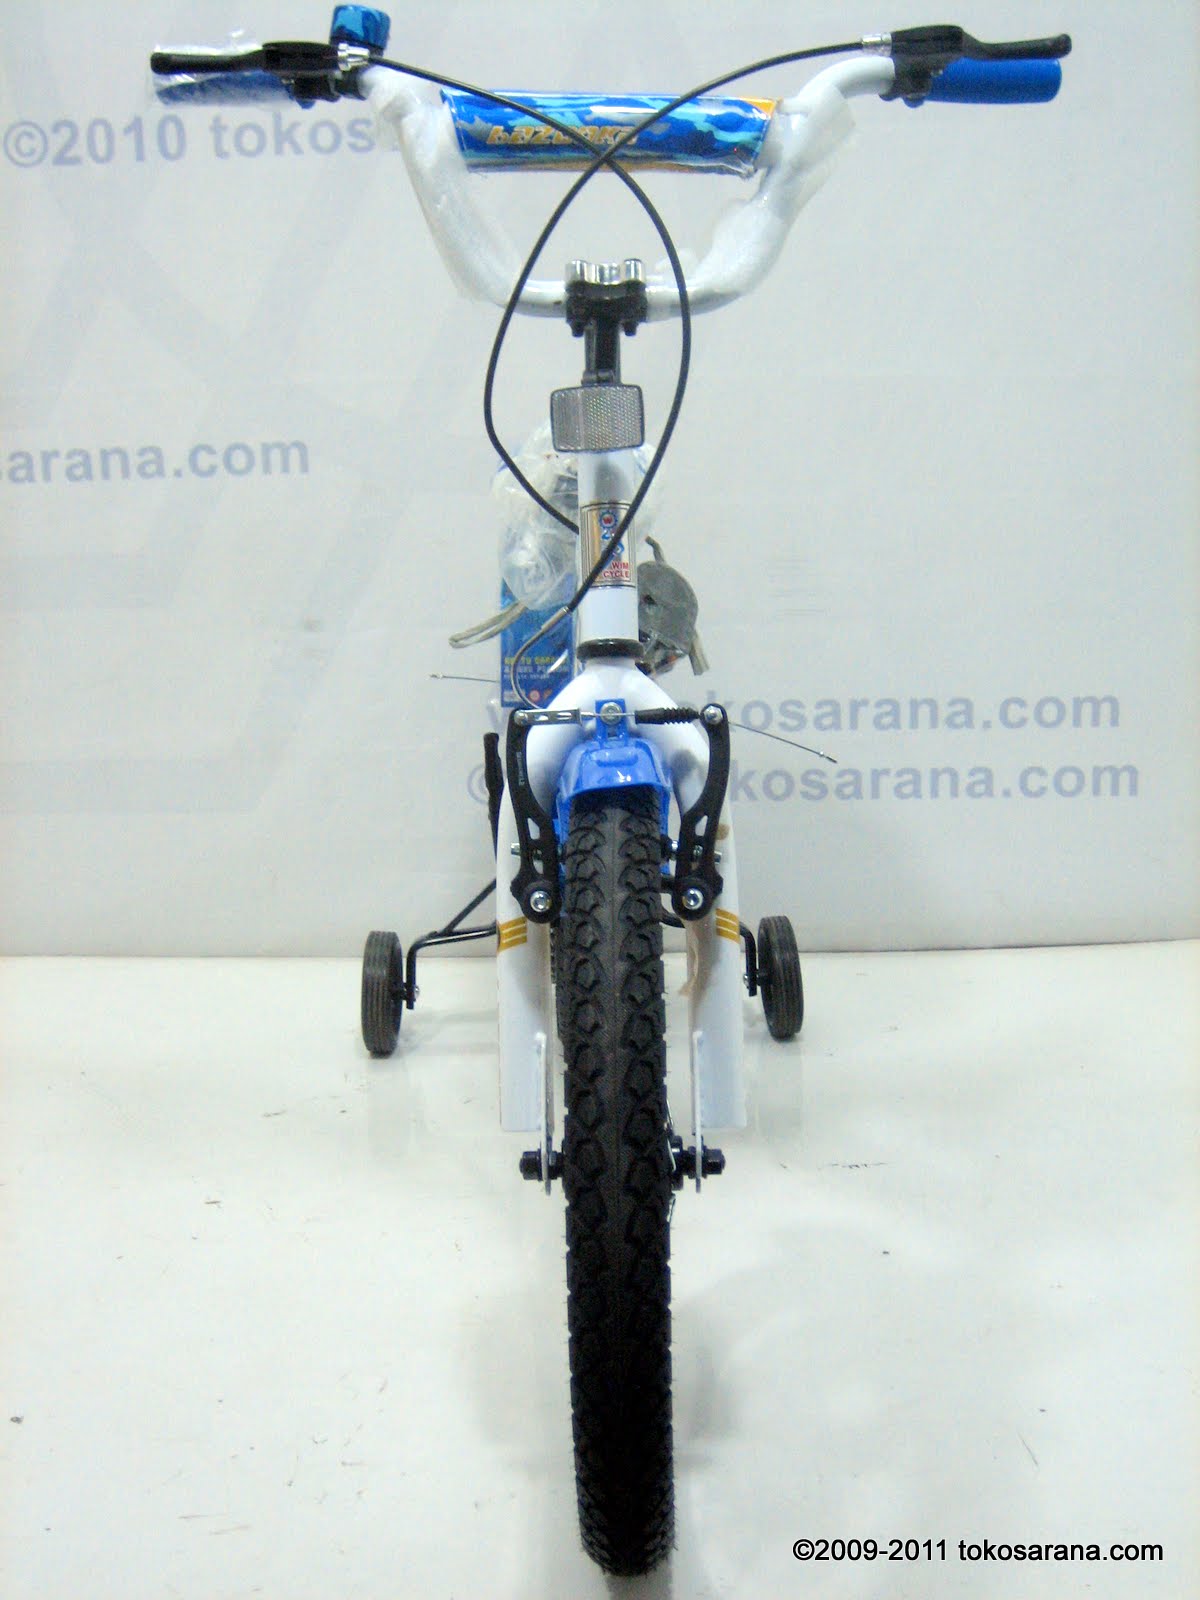 Tokomagenta: A Showcase of Products: Sepeda Anak WIMCYCLE 